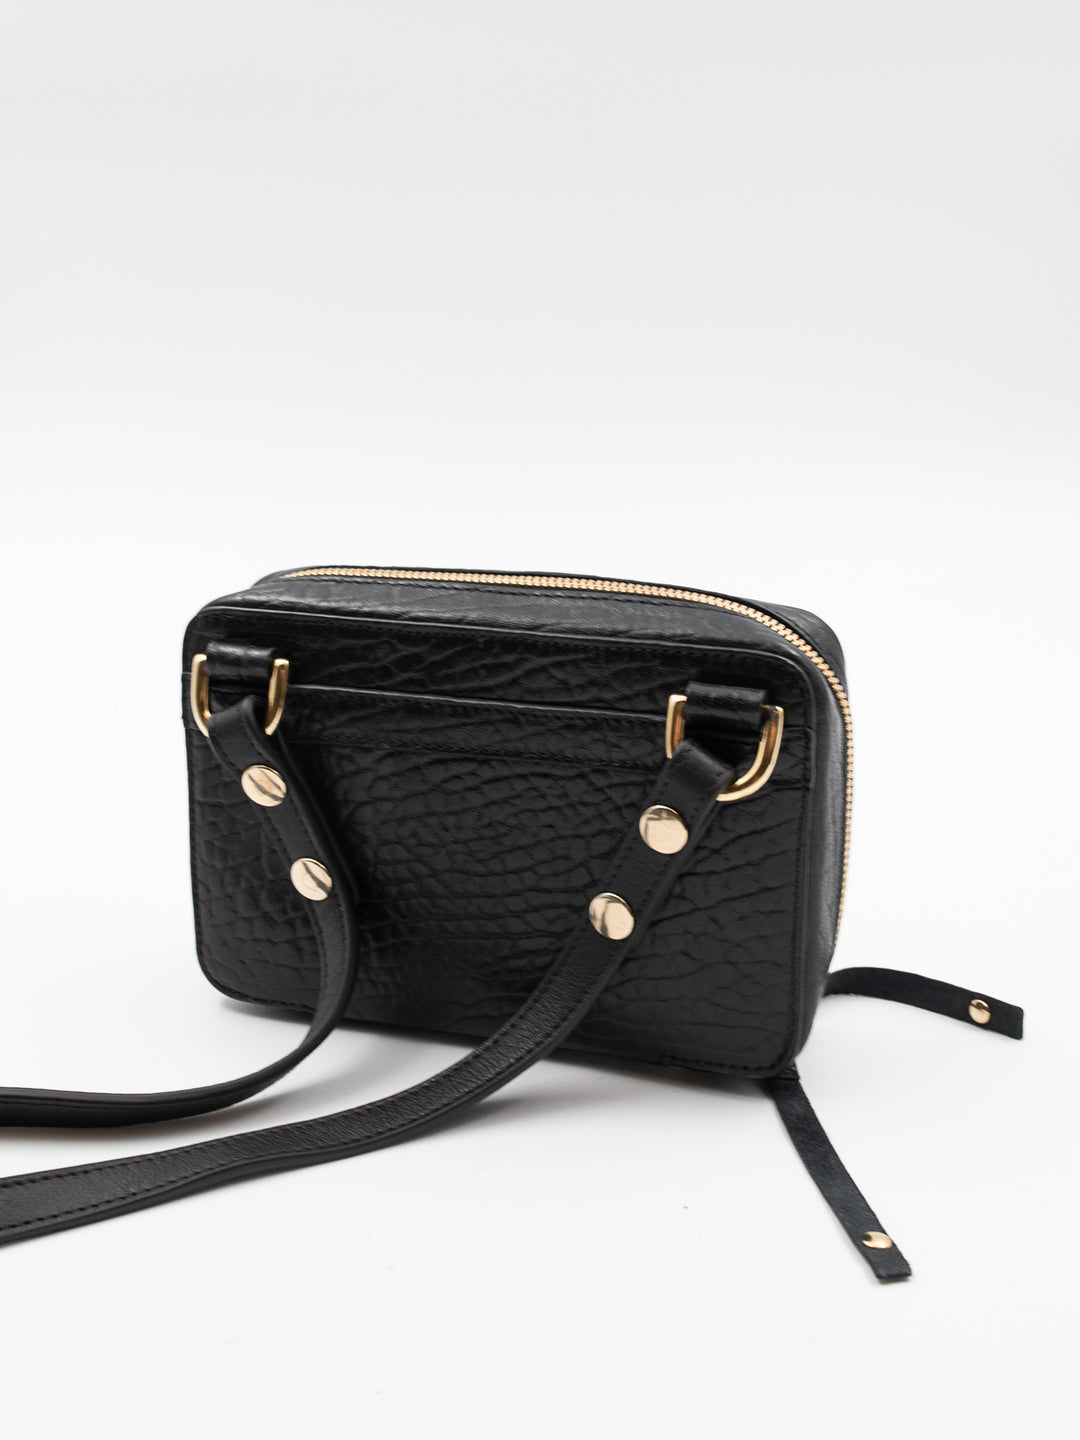 Blankens The Montauk Midi Black Grain small bag black leather bag with gold details